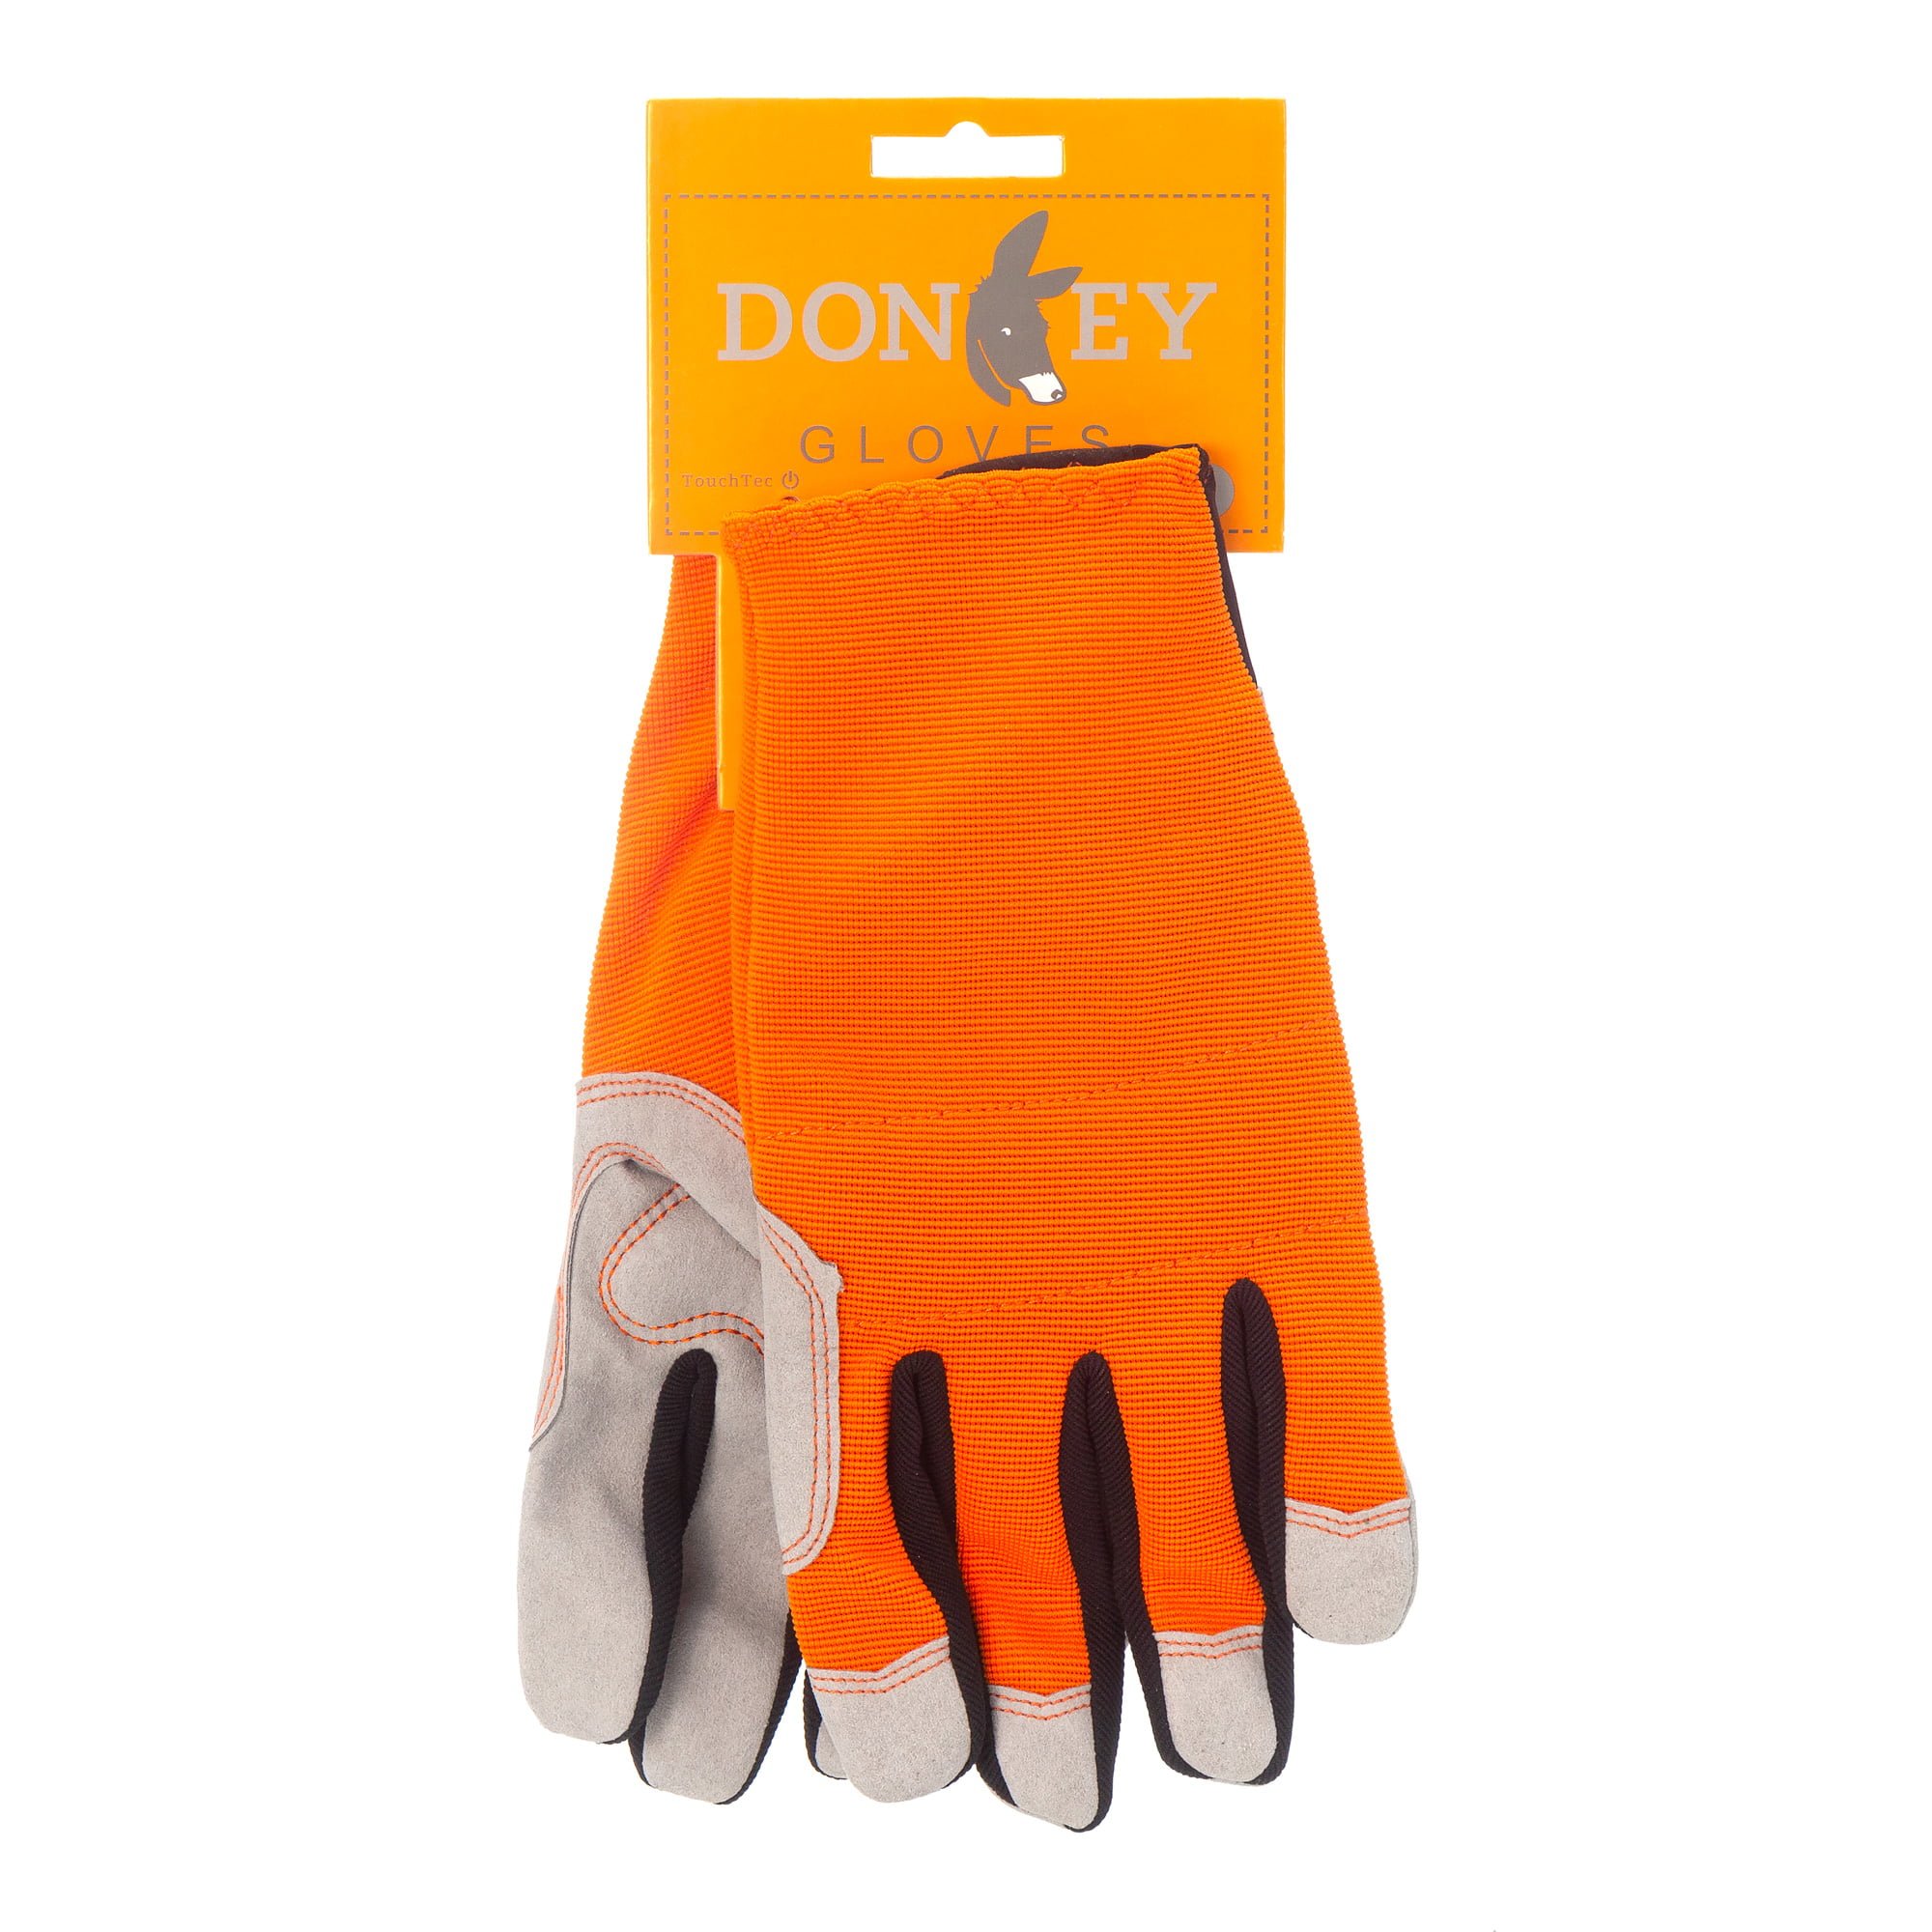 pair orange donkey gardening gloves with packaging tag